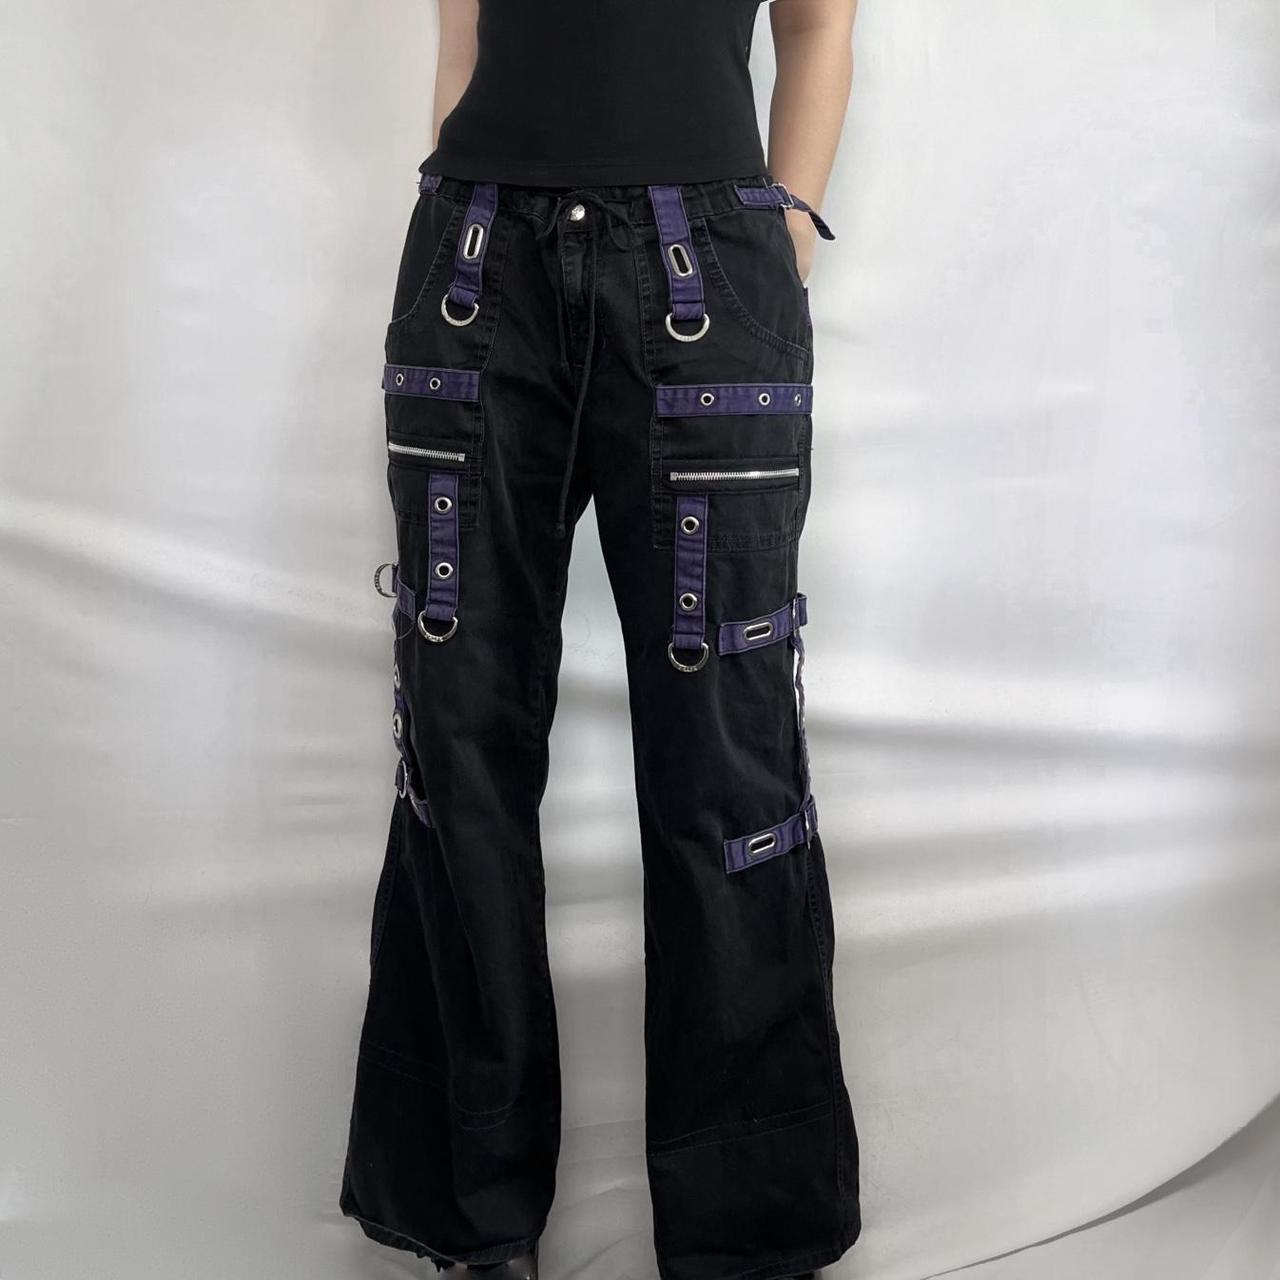 Tripp NYC Women's Black and Purple Jeans | Depop